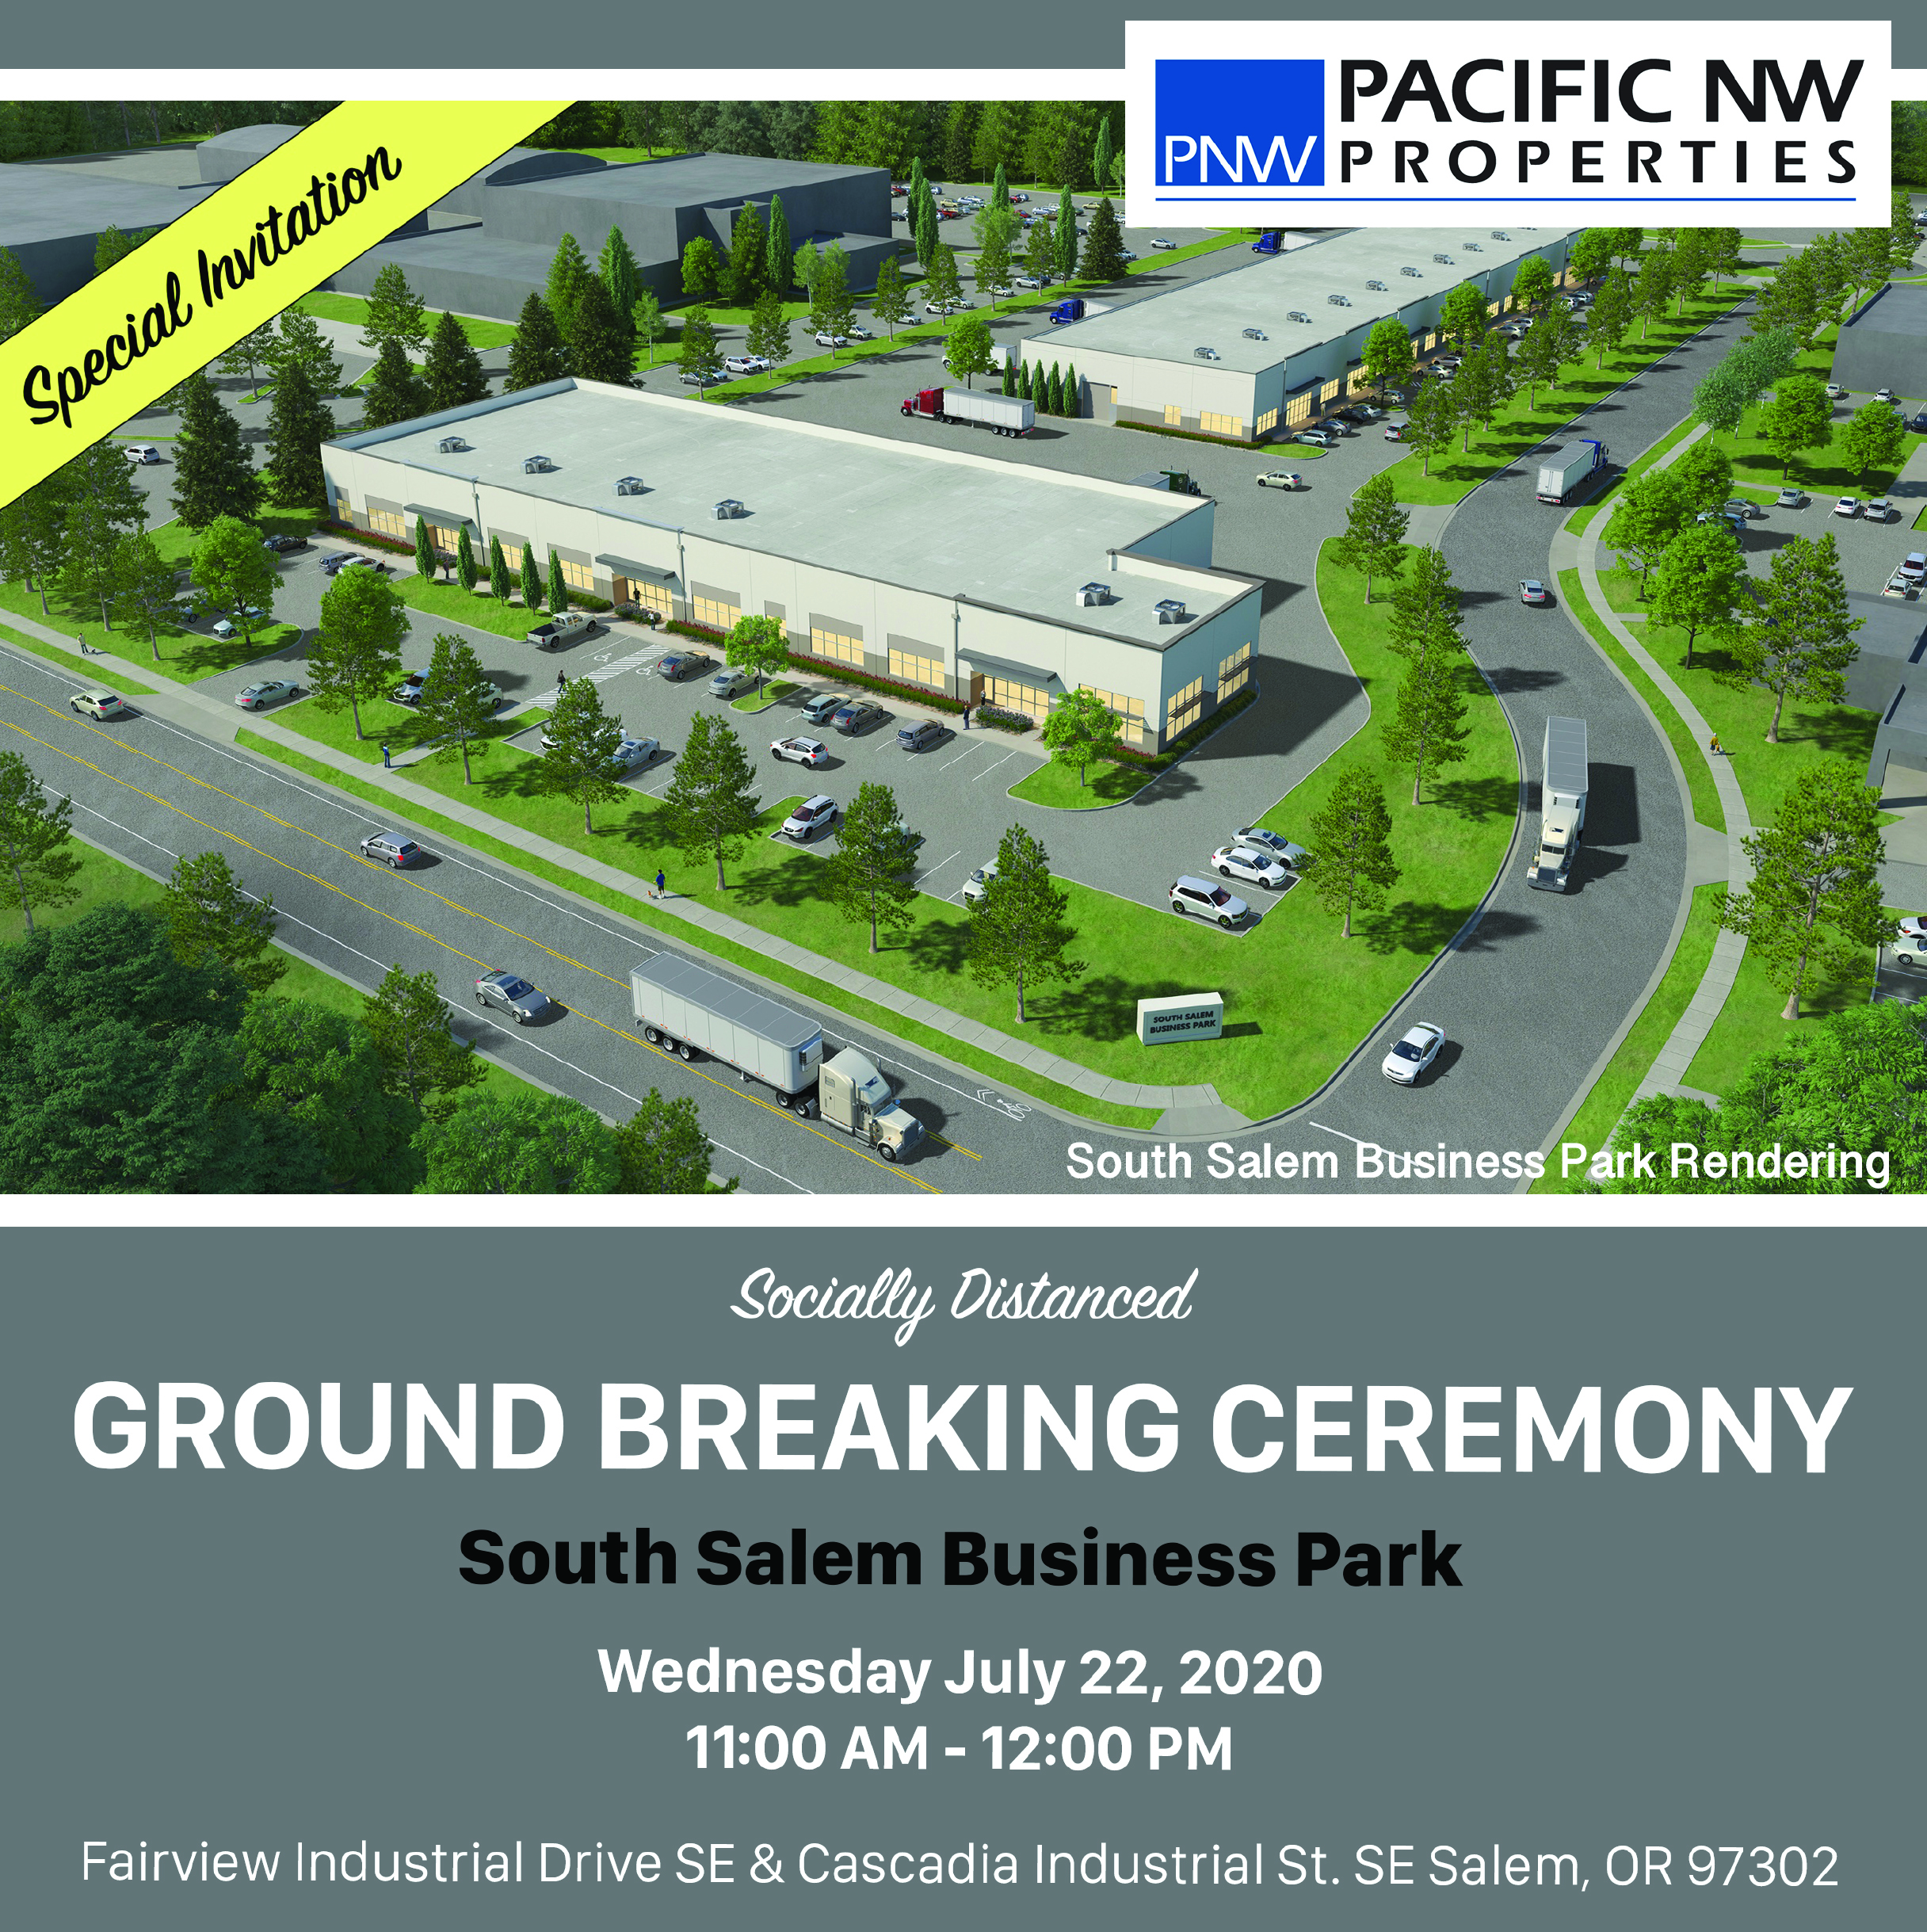 Pacific NW Properties breaks ground on industrial space in